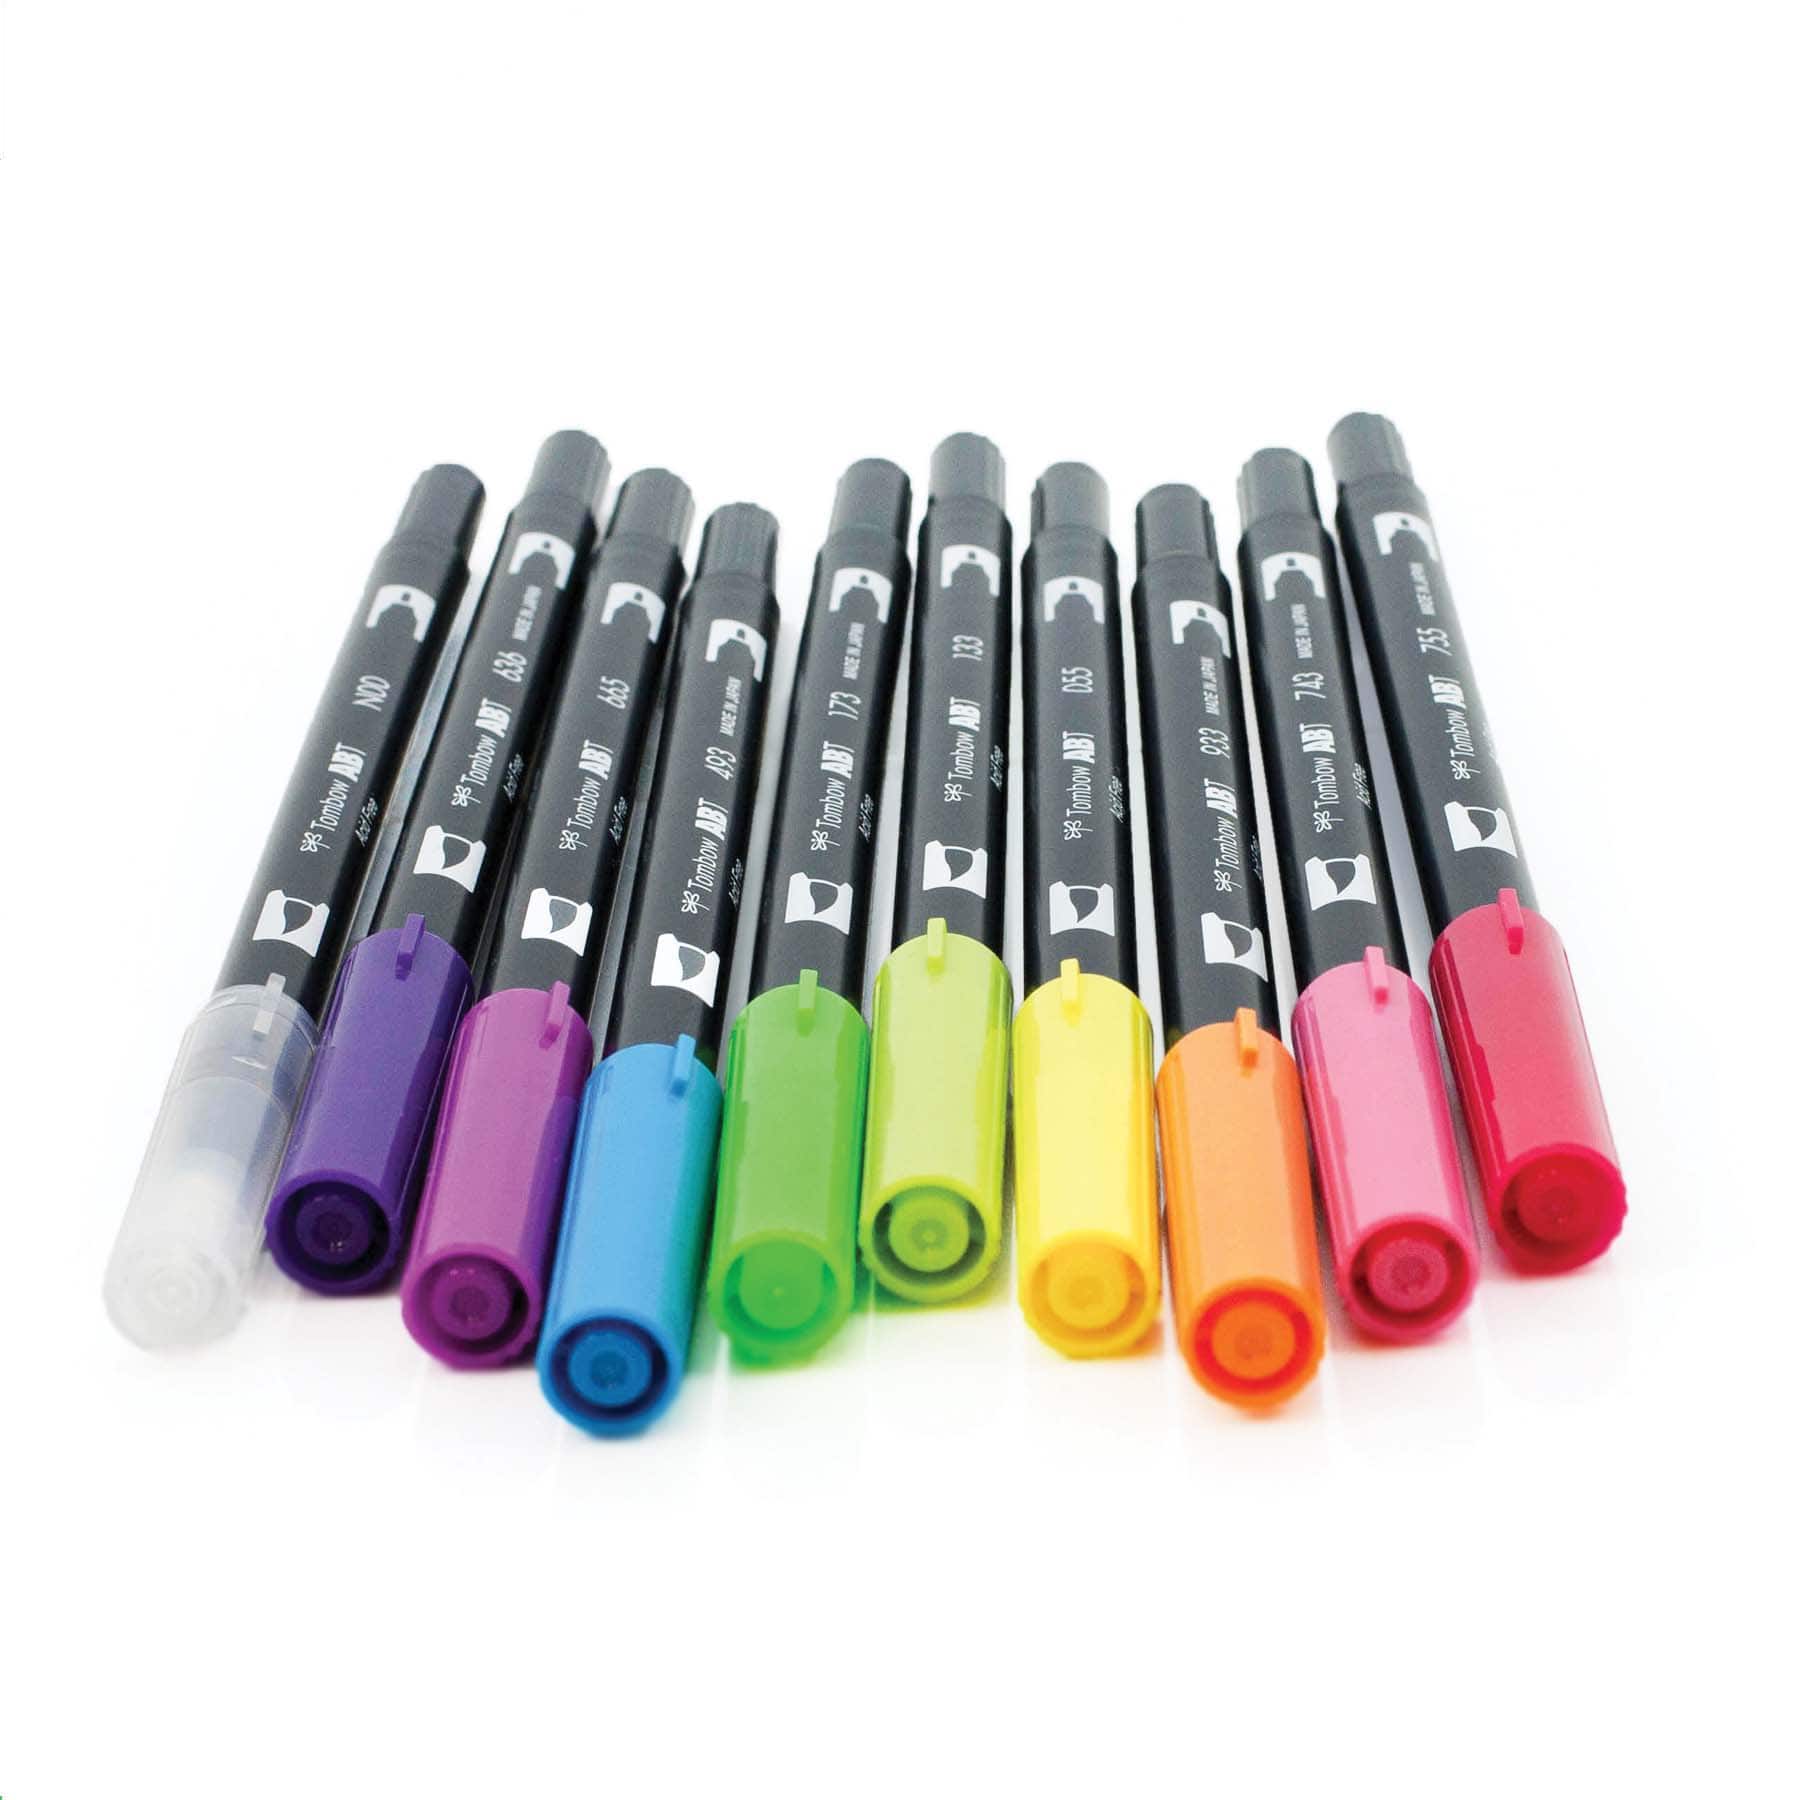 Tombow Dual Brush-Pen 379 Jade Green - MICA Store